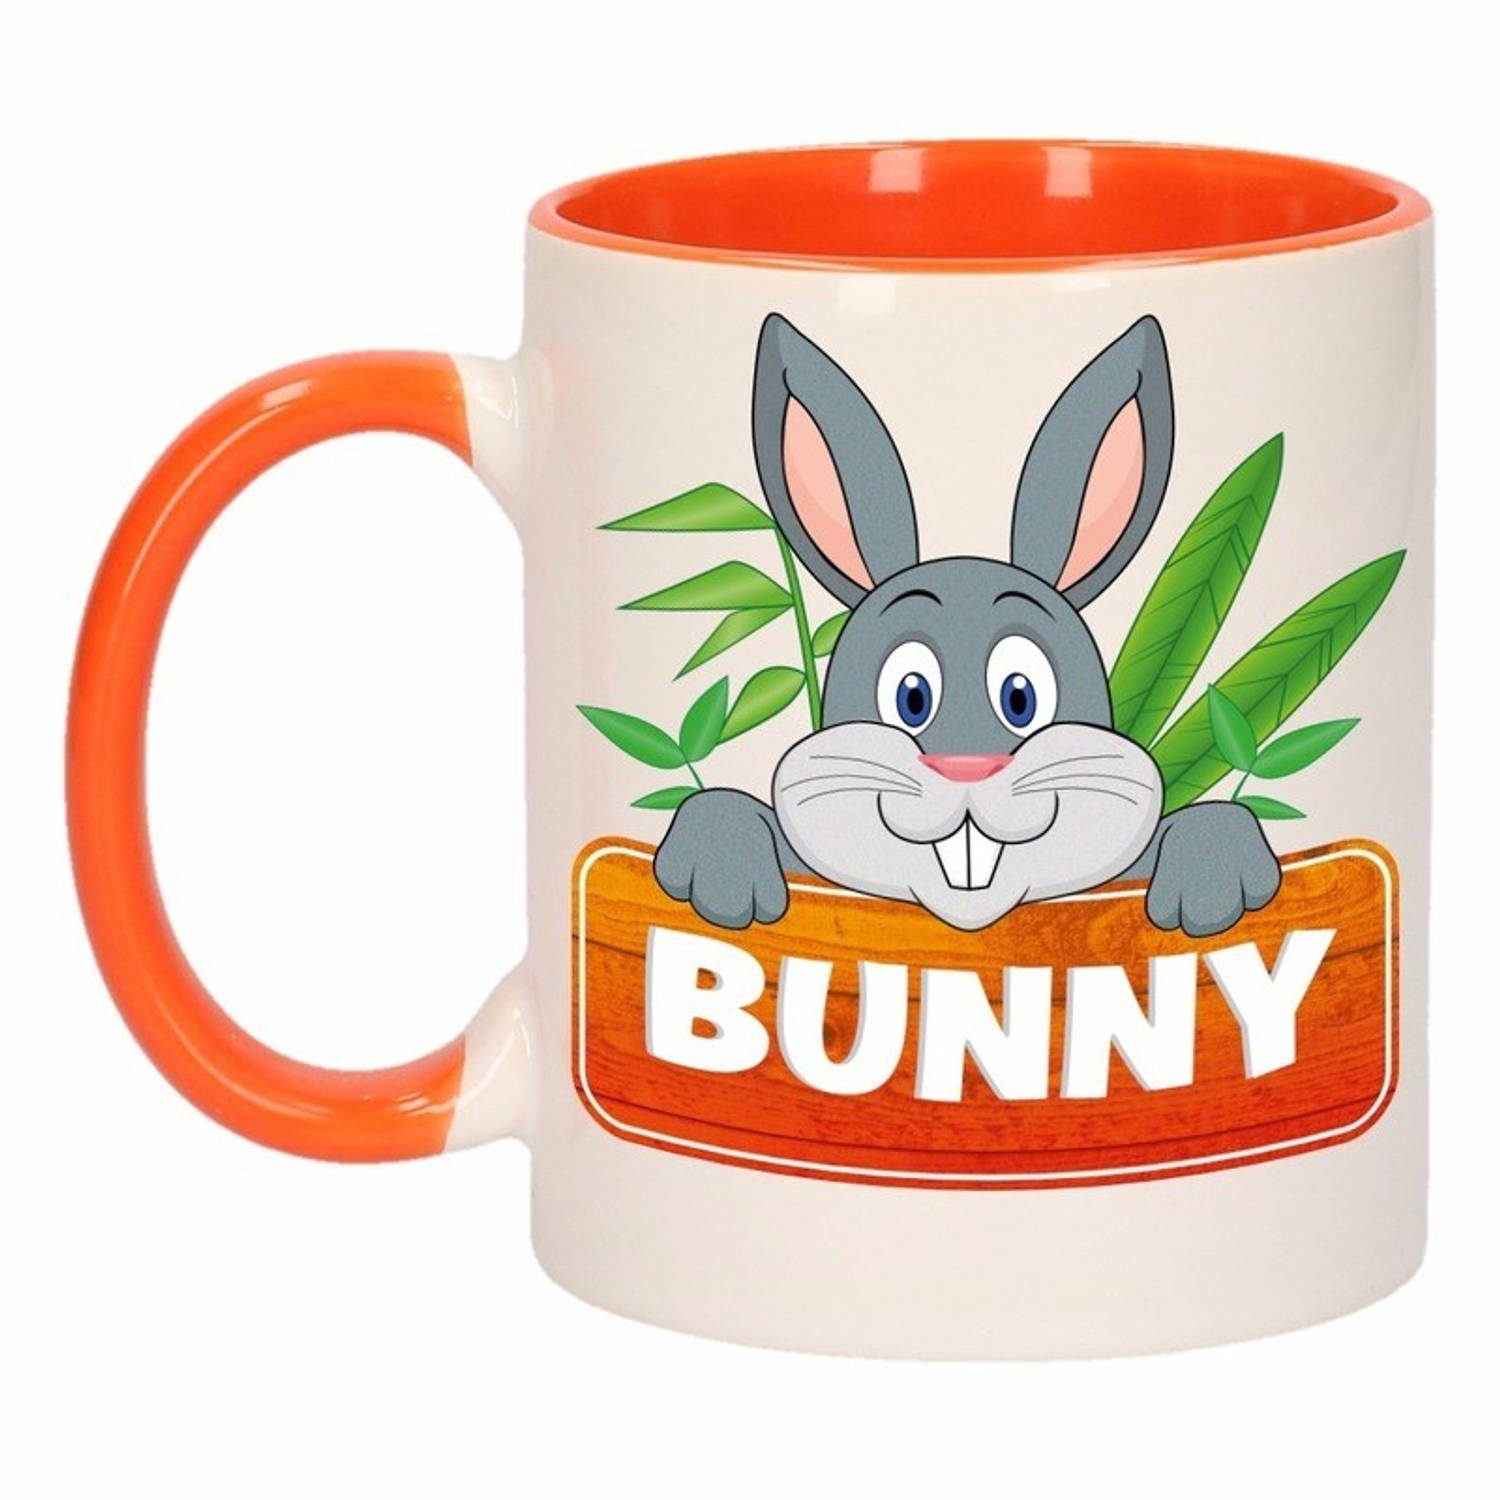 1x bunny beker-mok oranje met wit 300 ml keramiek konijnen bekers